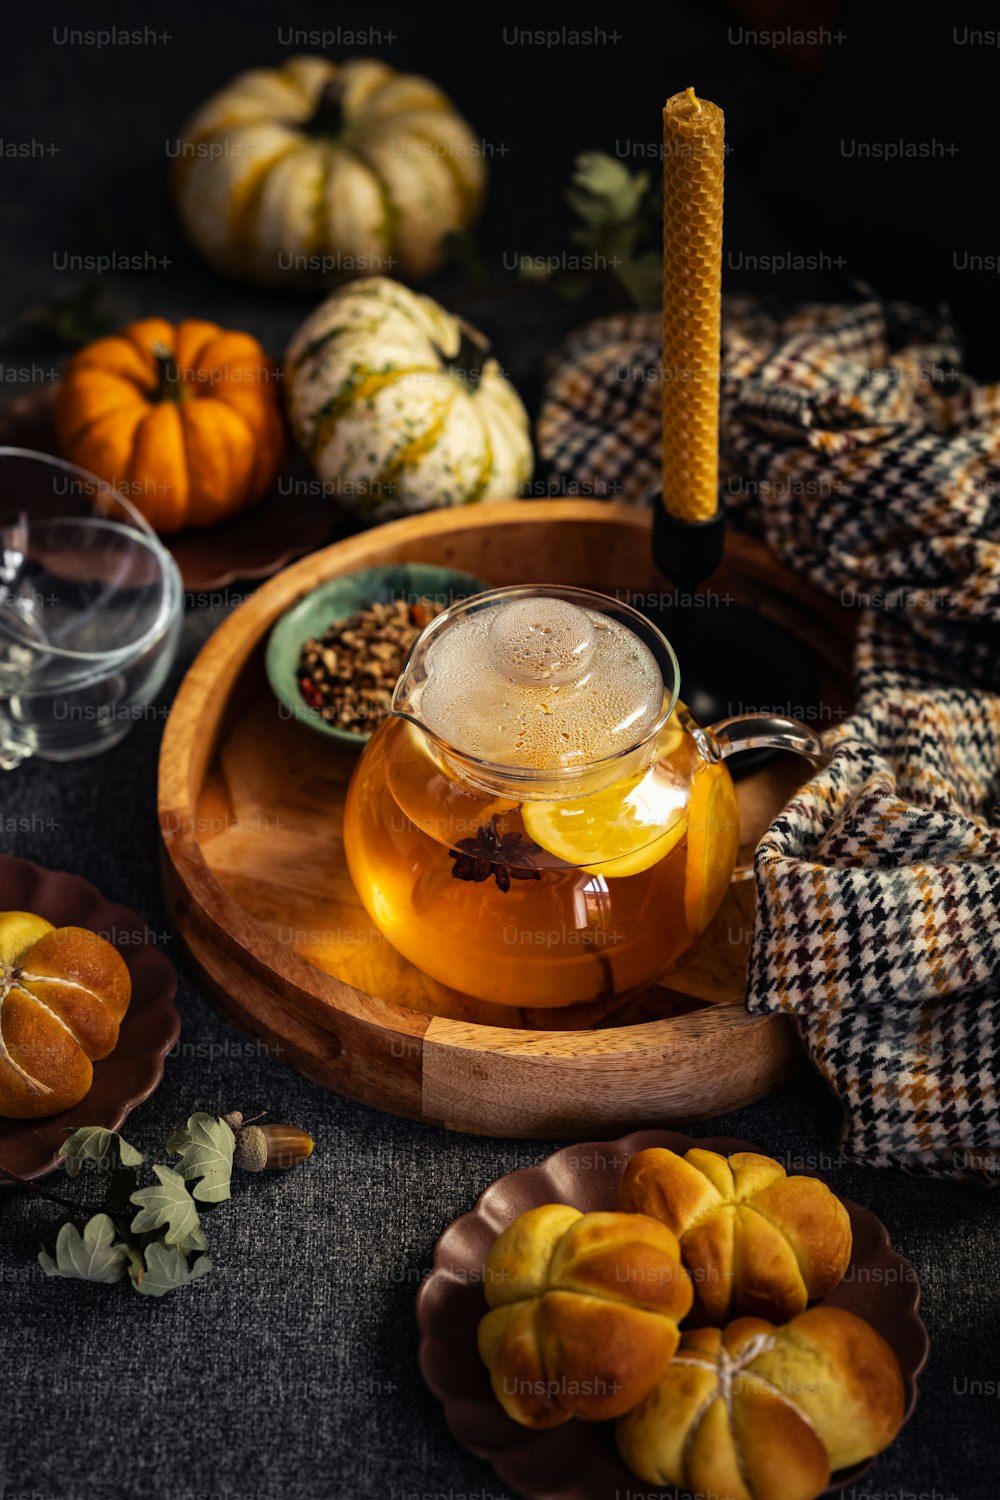 a glass tea pot filled with liquid next to a plate of pumpkins